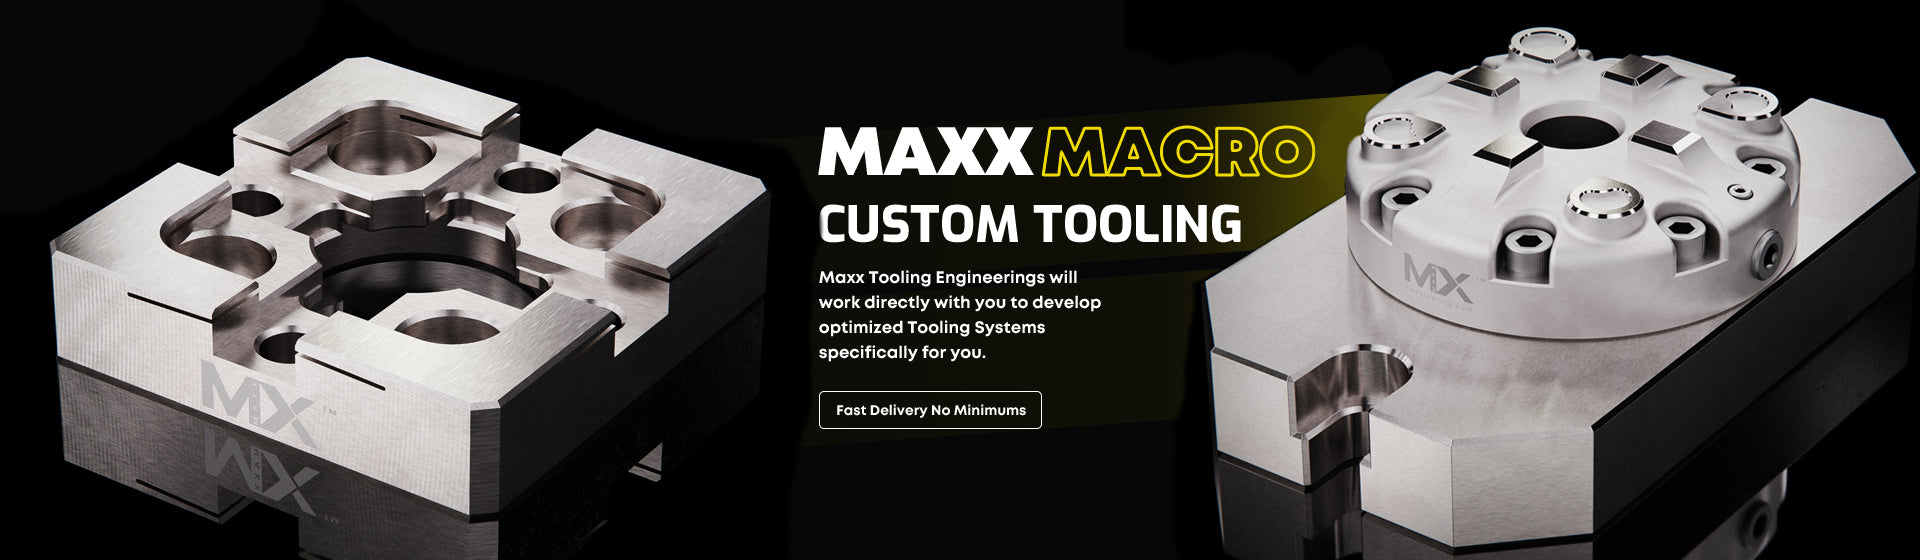 MaxxMacro (System 3R)